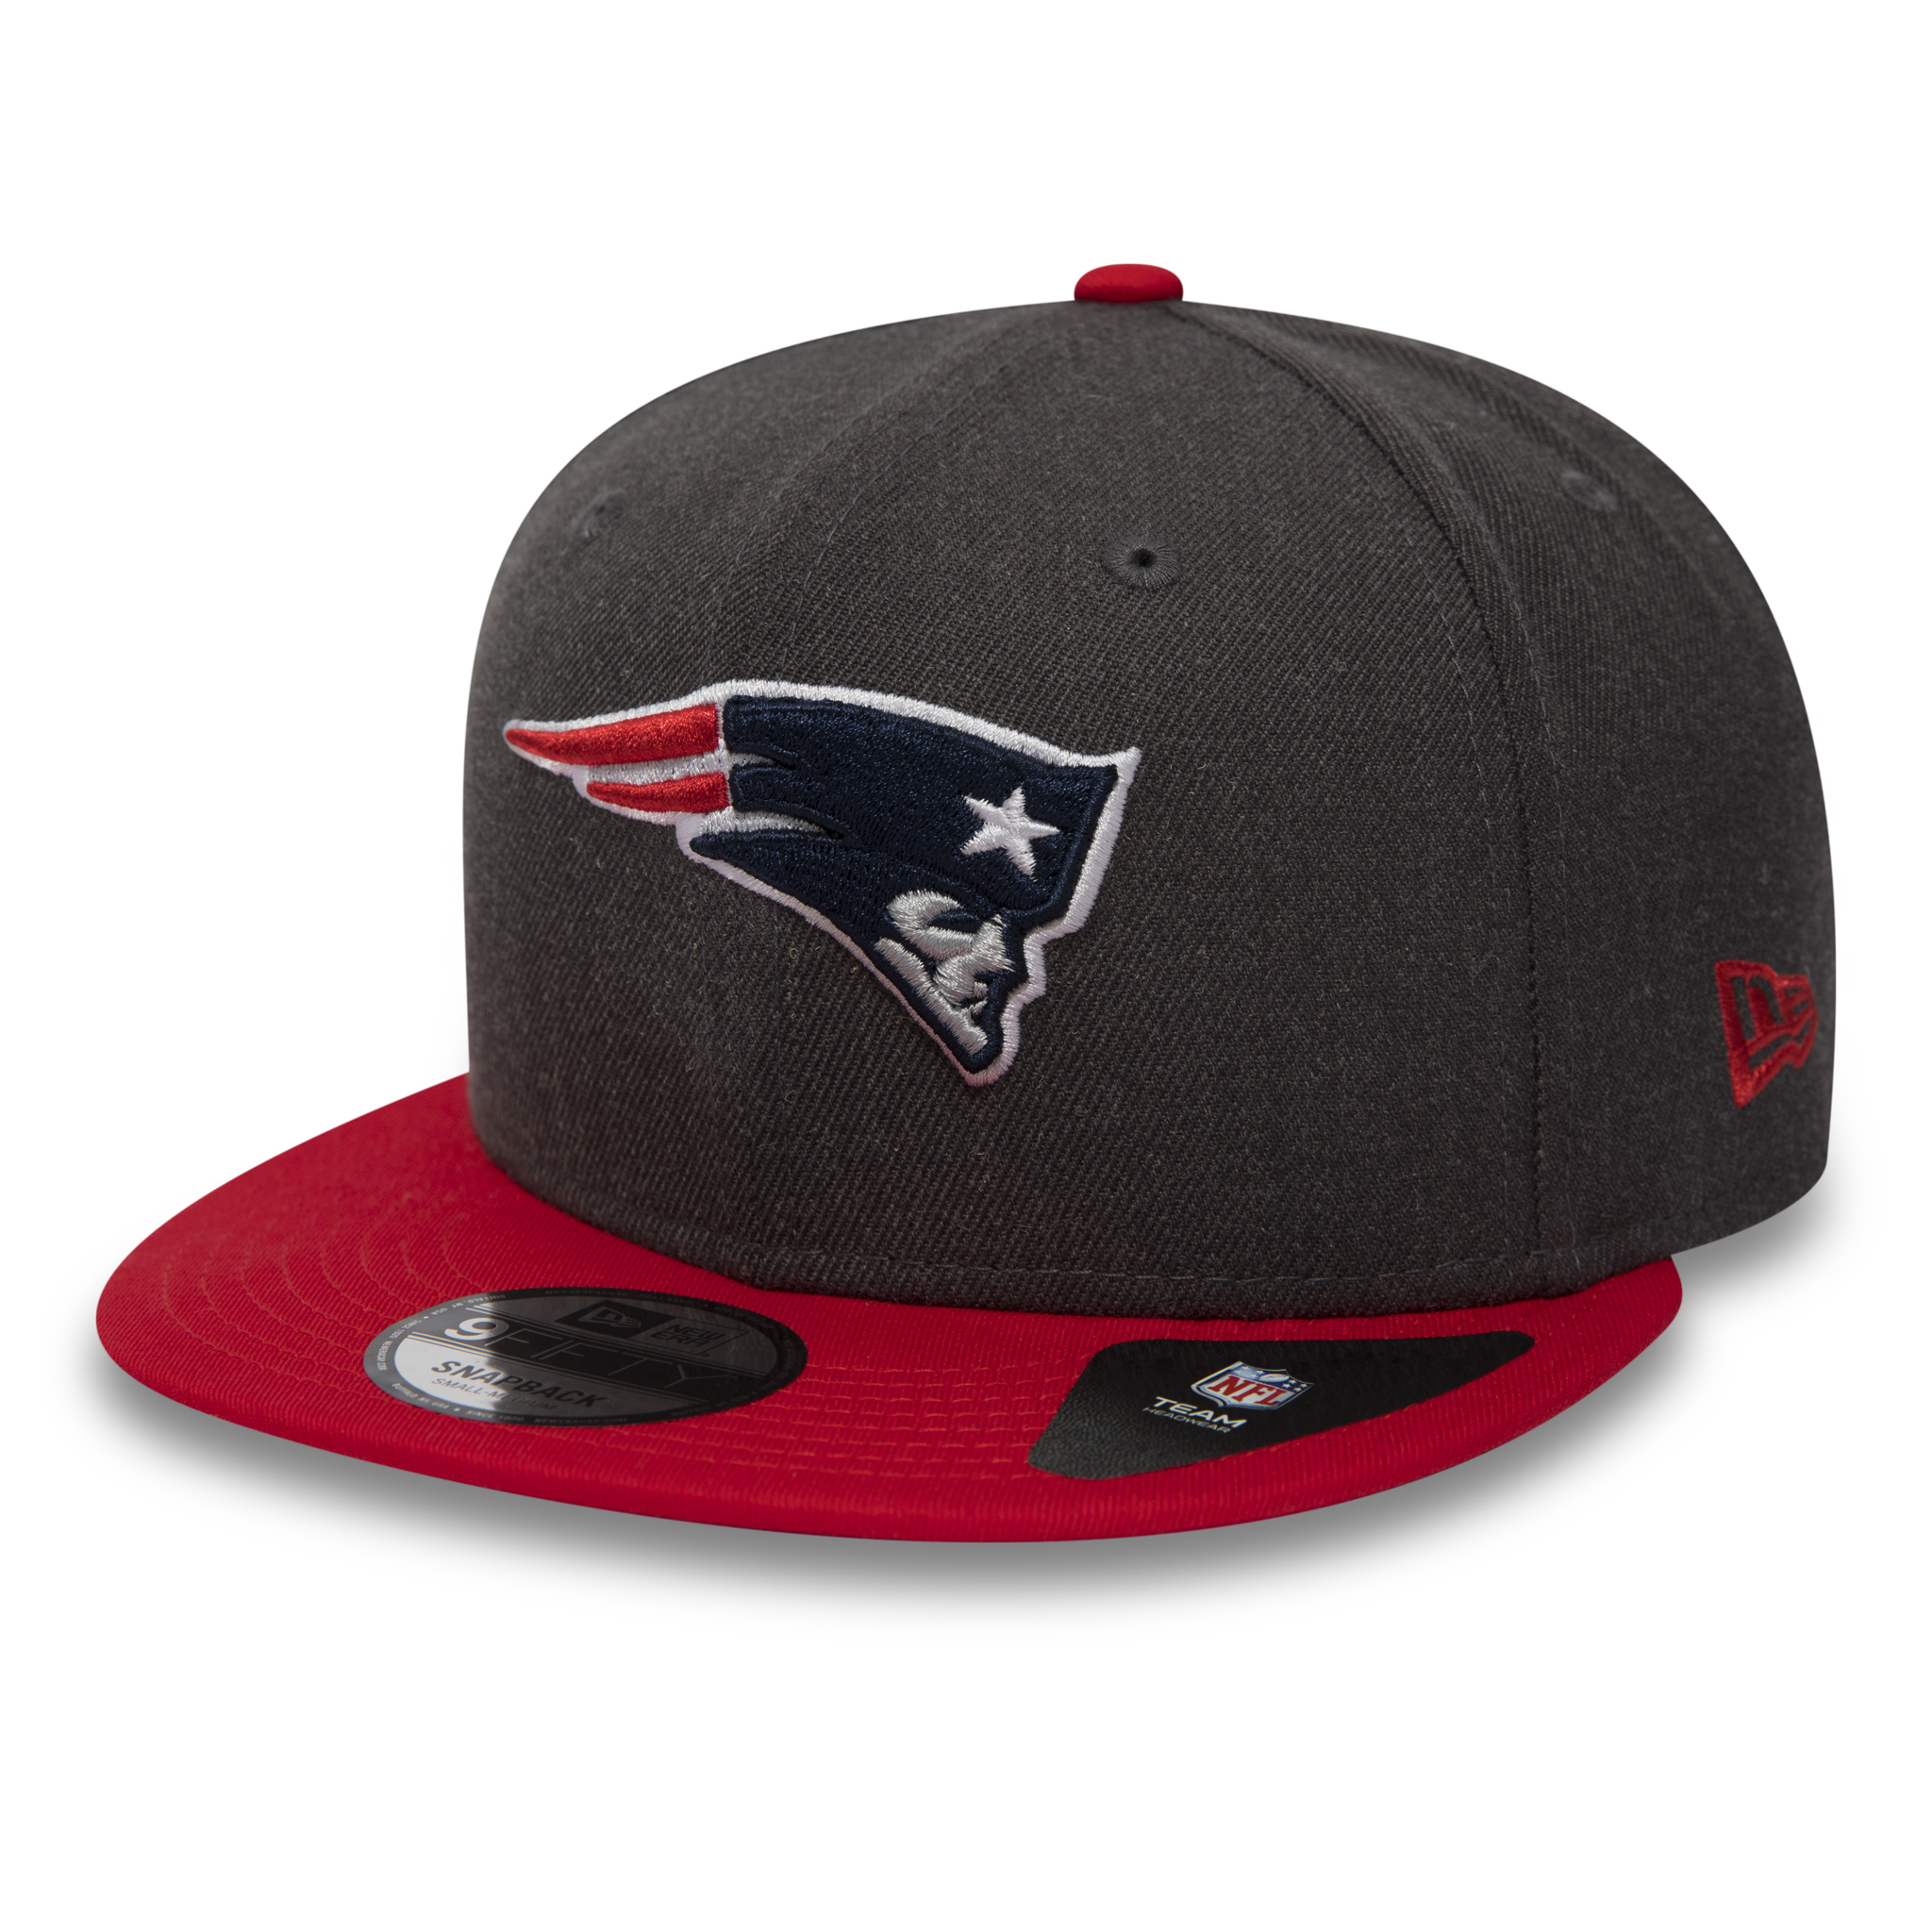 New England Patriots Graphite 9FIFTY Cap